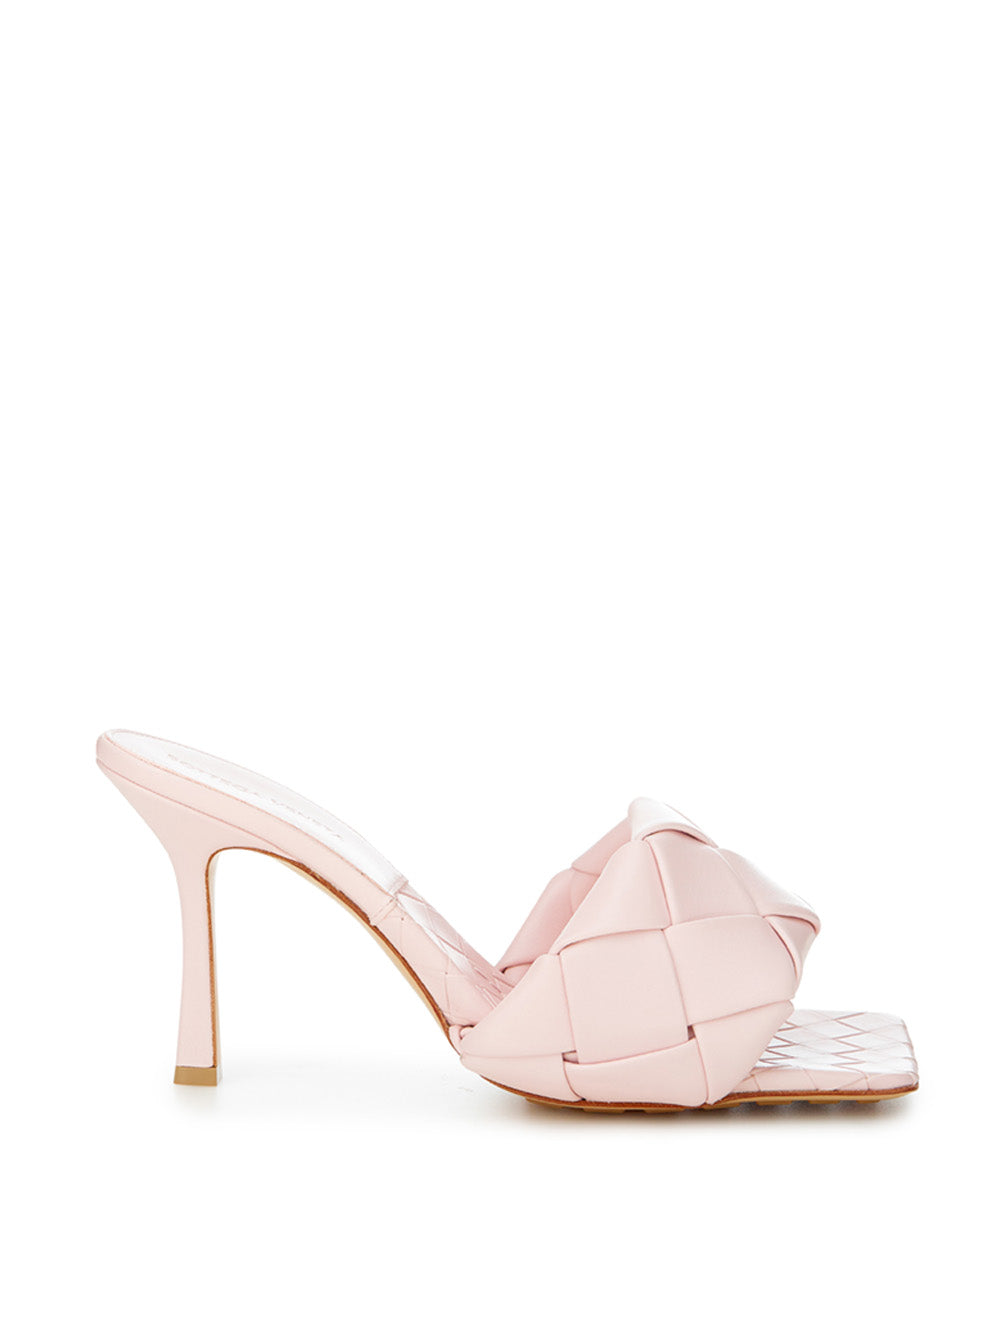 Fashionsarah.com Fashionsarah.com Bottega Veneta Light Pink Leather Heeled Sandal Mule with Intreccio